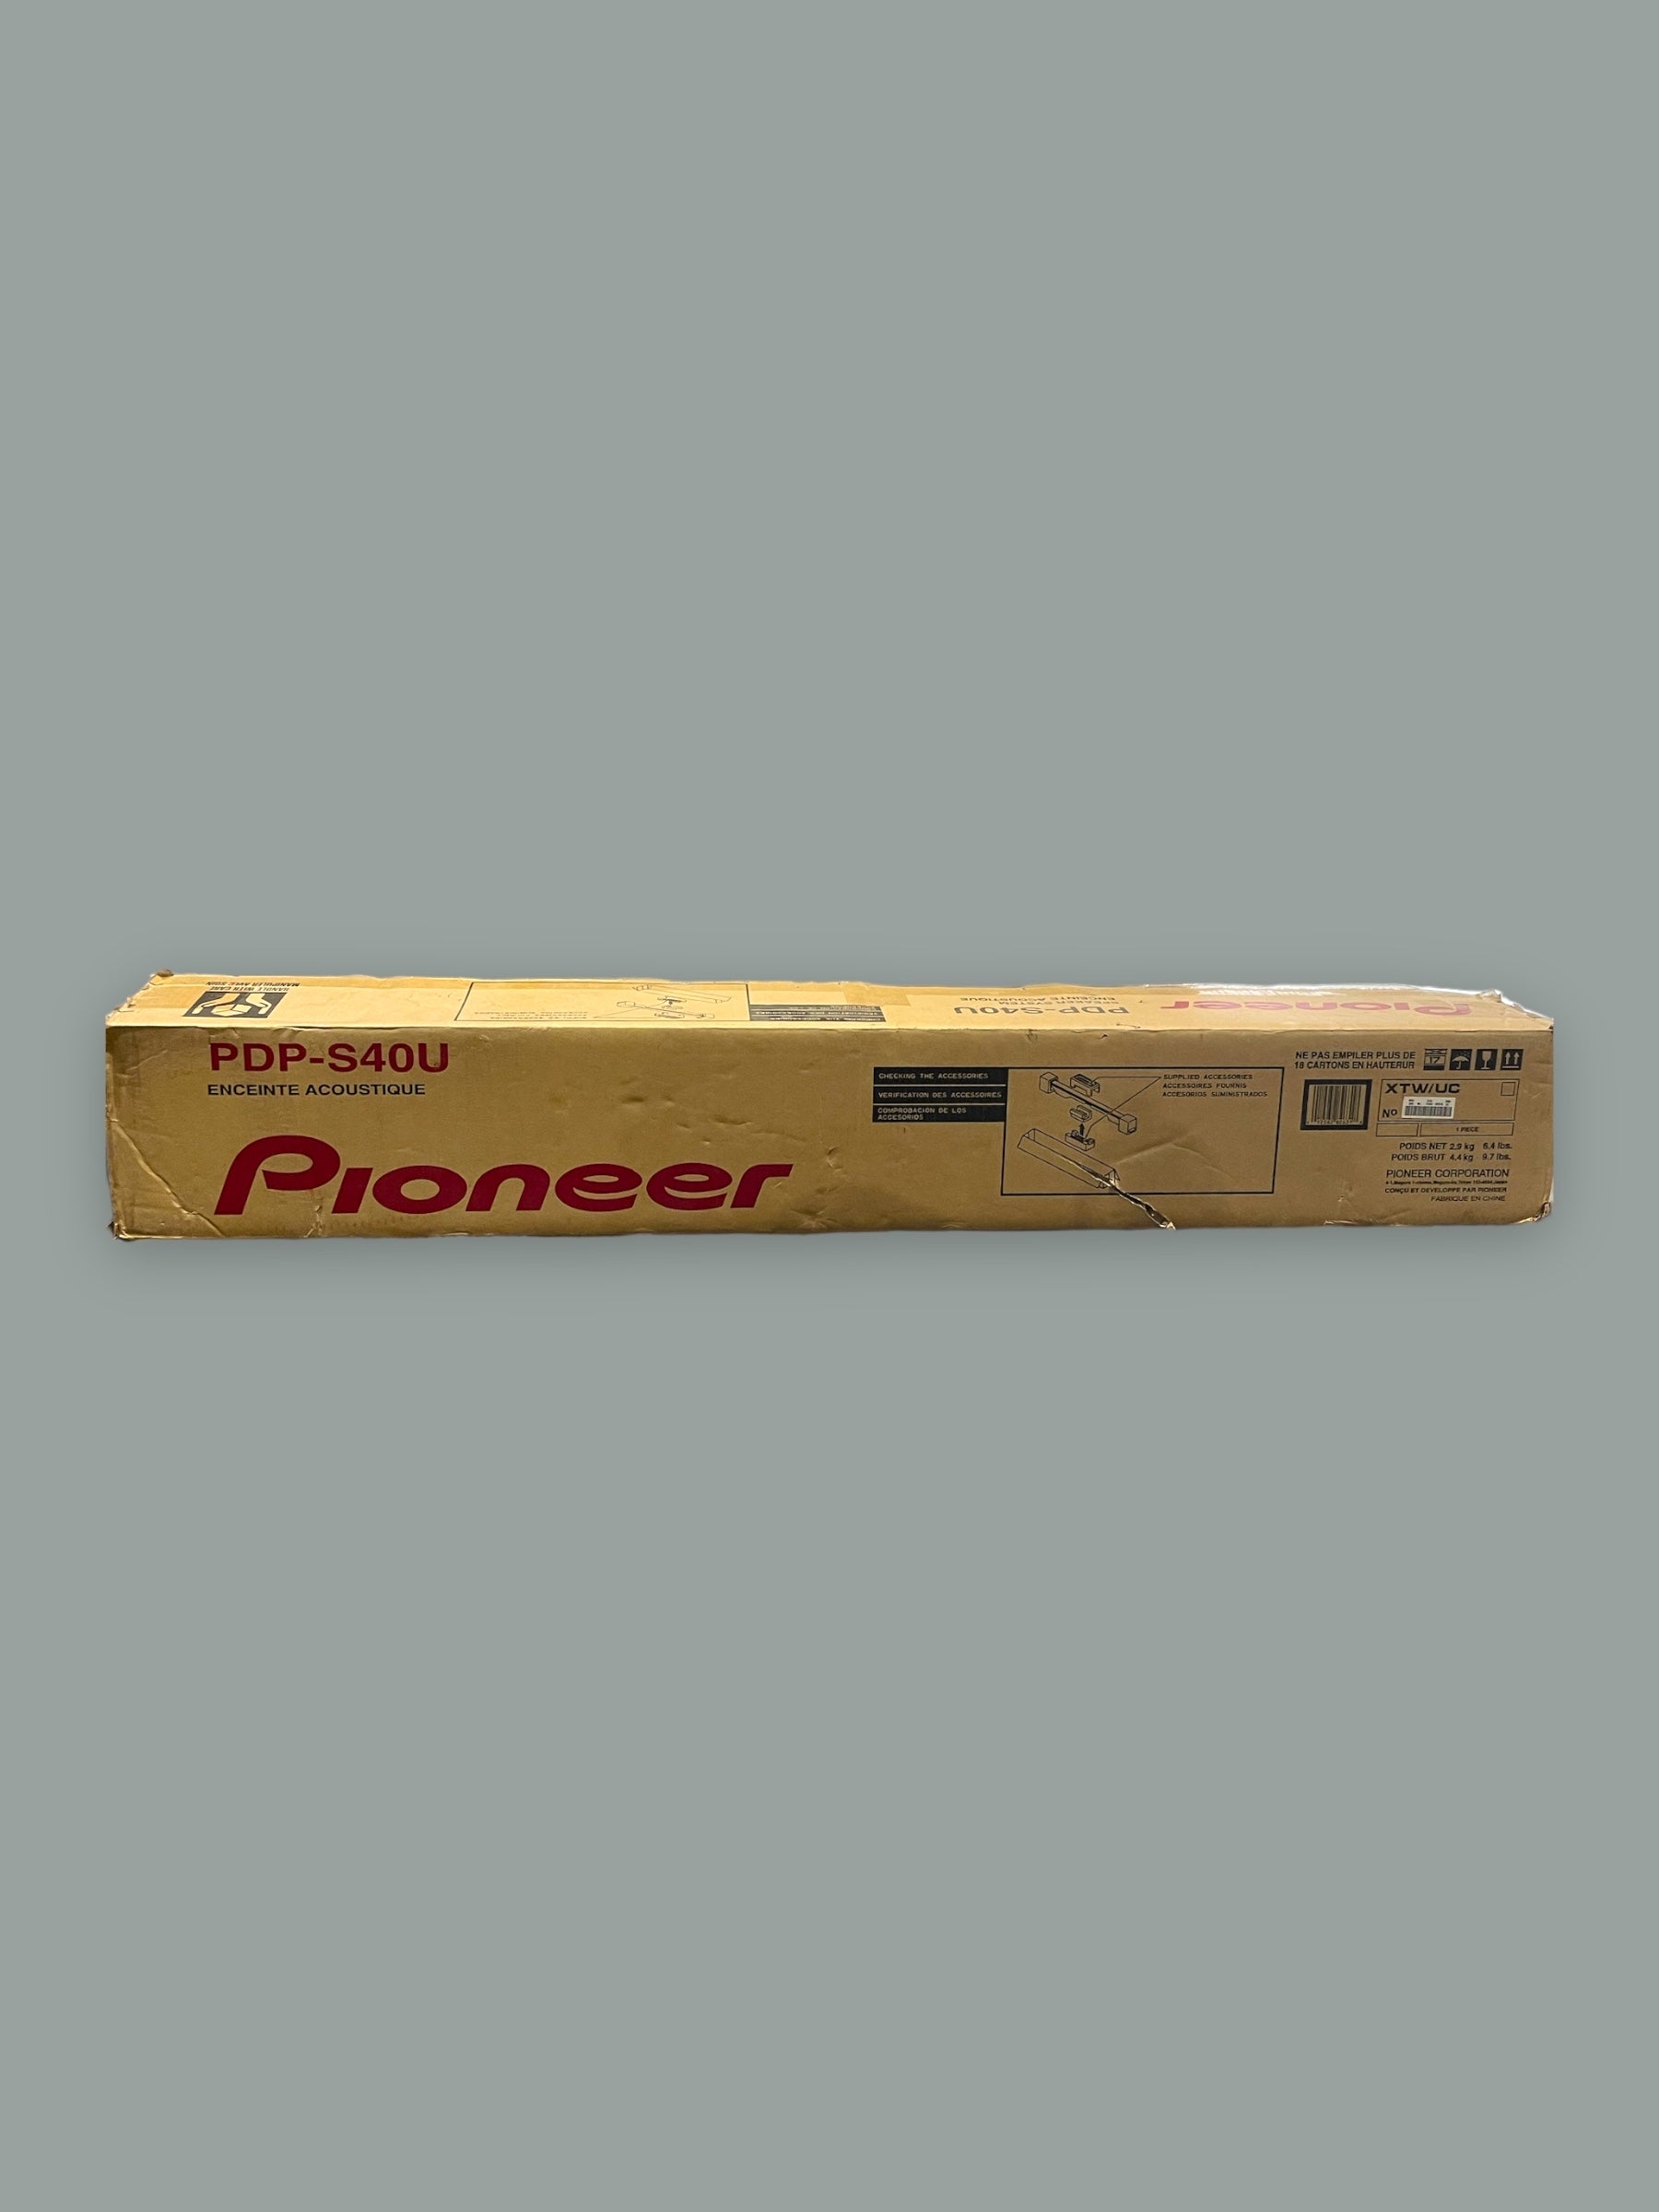  Barre de son Pioneer PDP-S40U